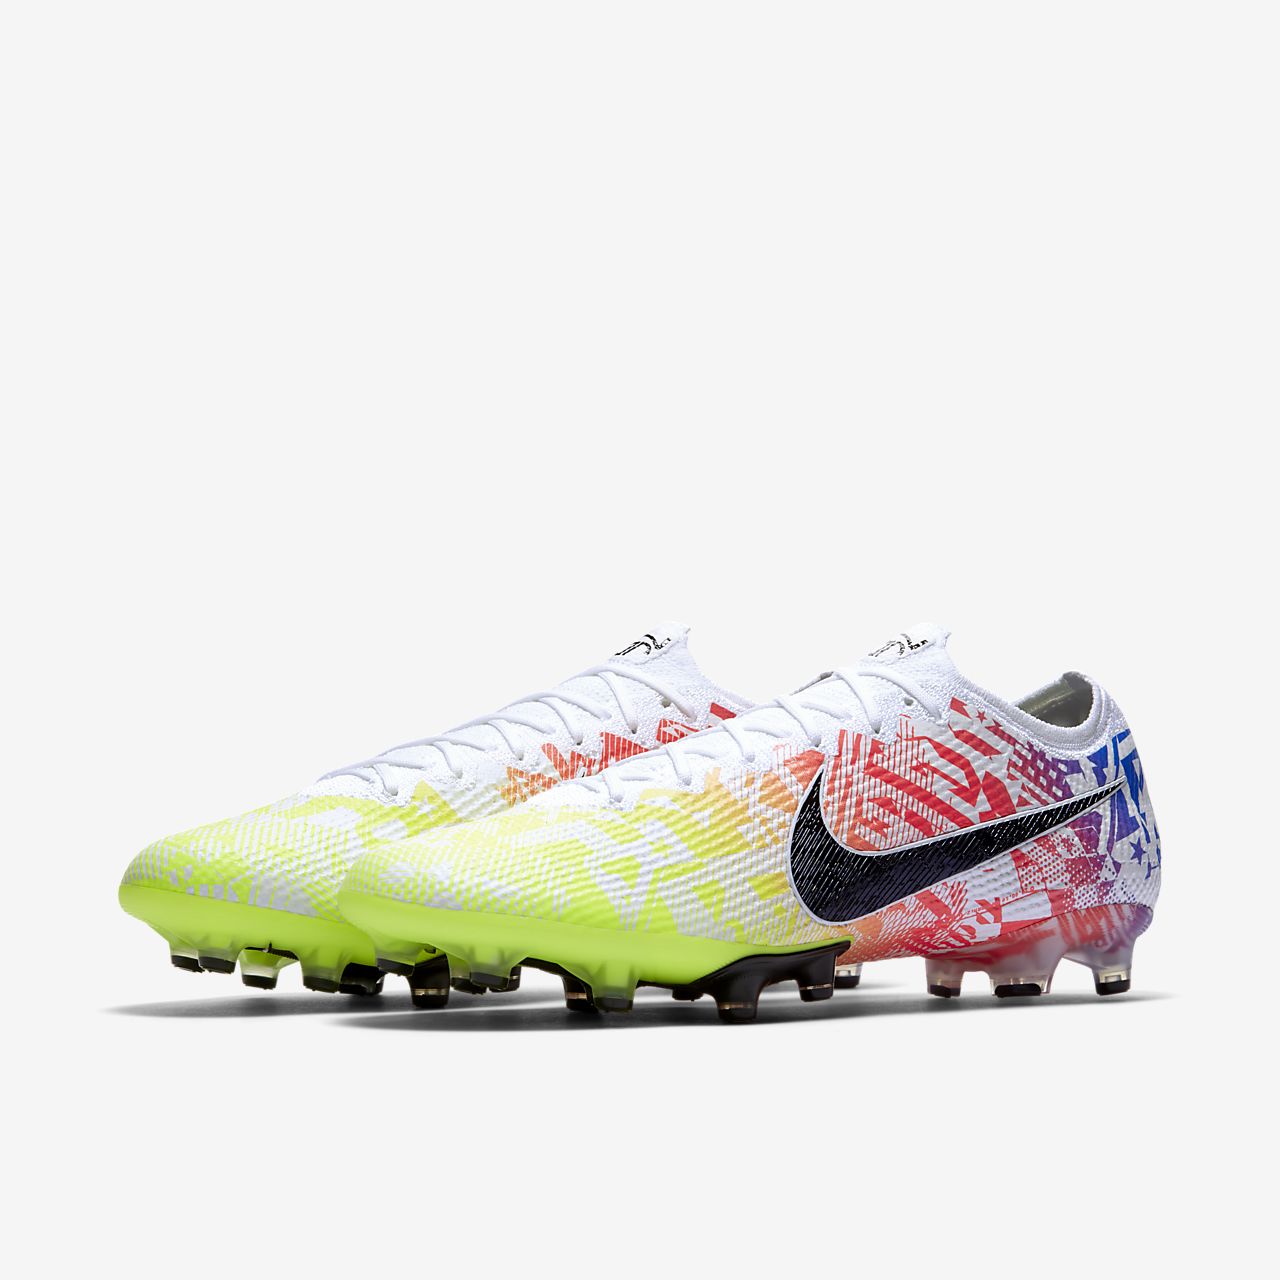 Purchase Nike Mercurial Vapor XI Neymar FG Soccer Cleats .